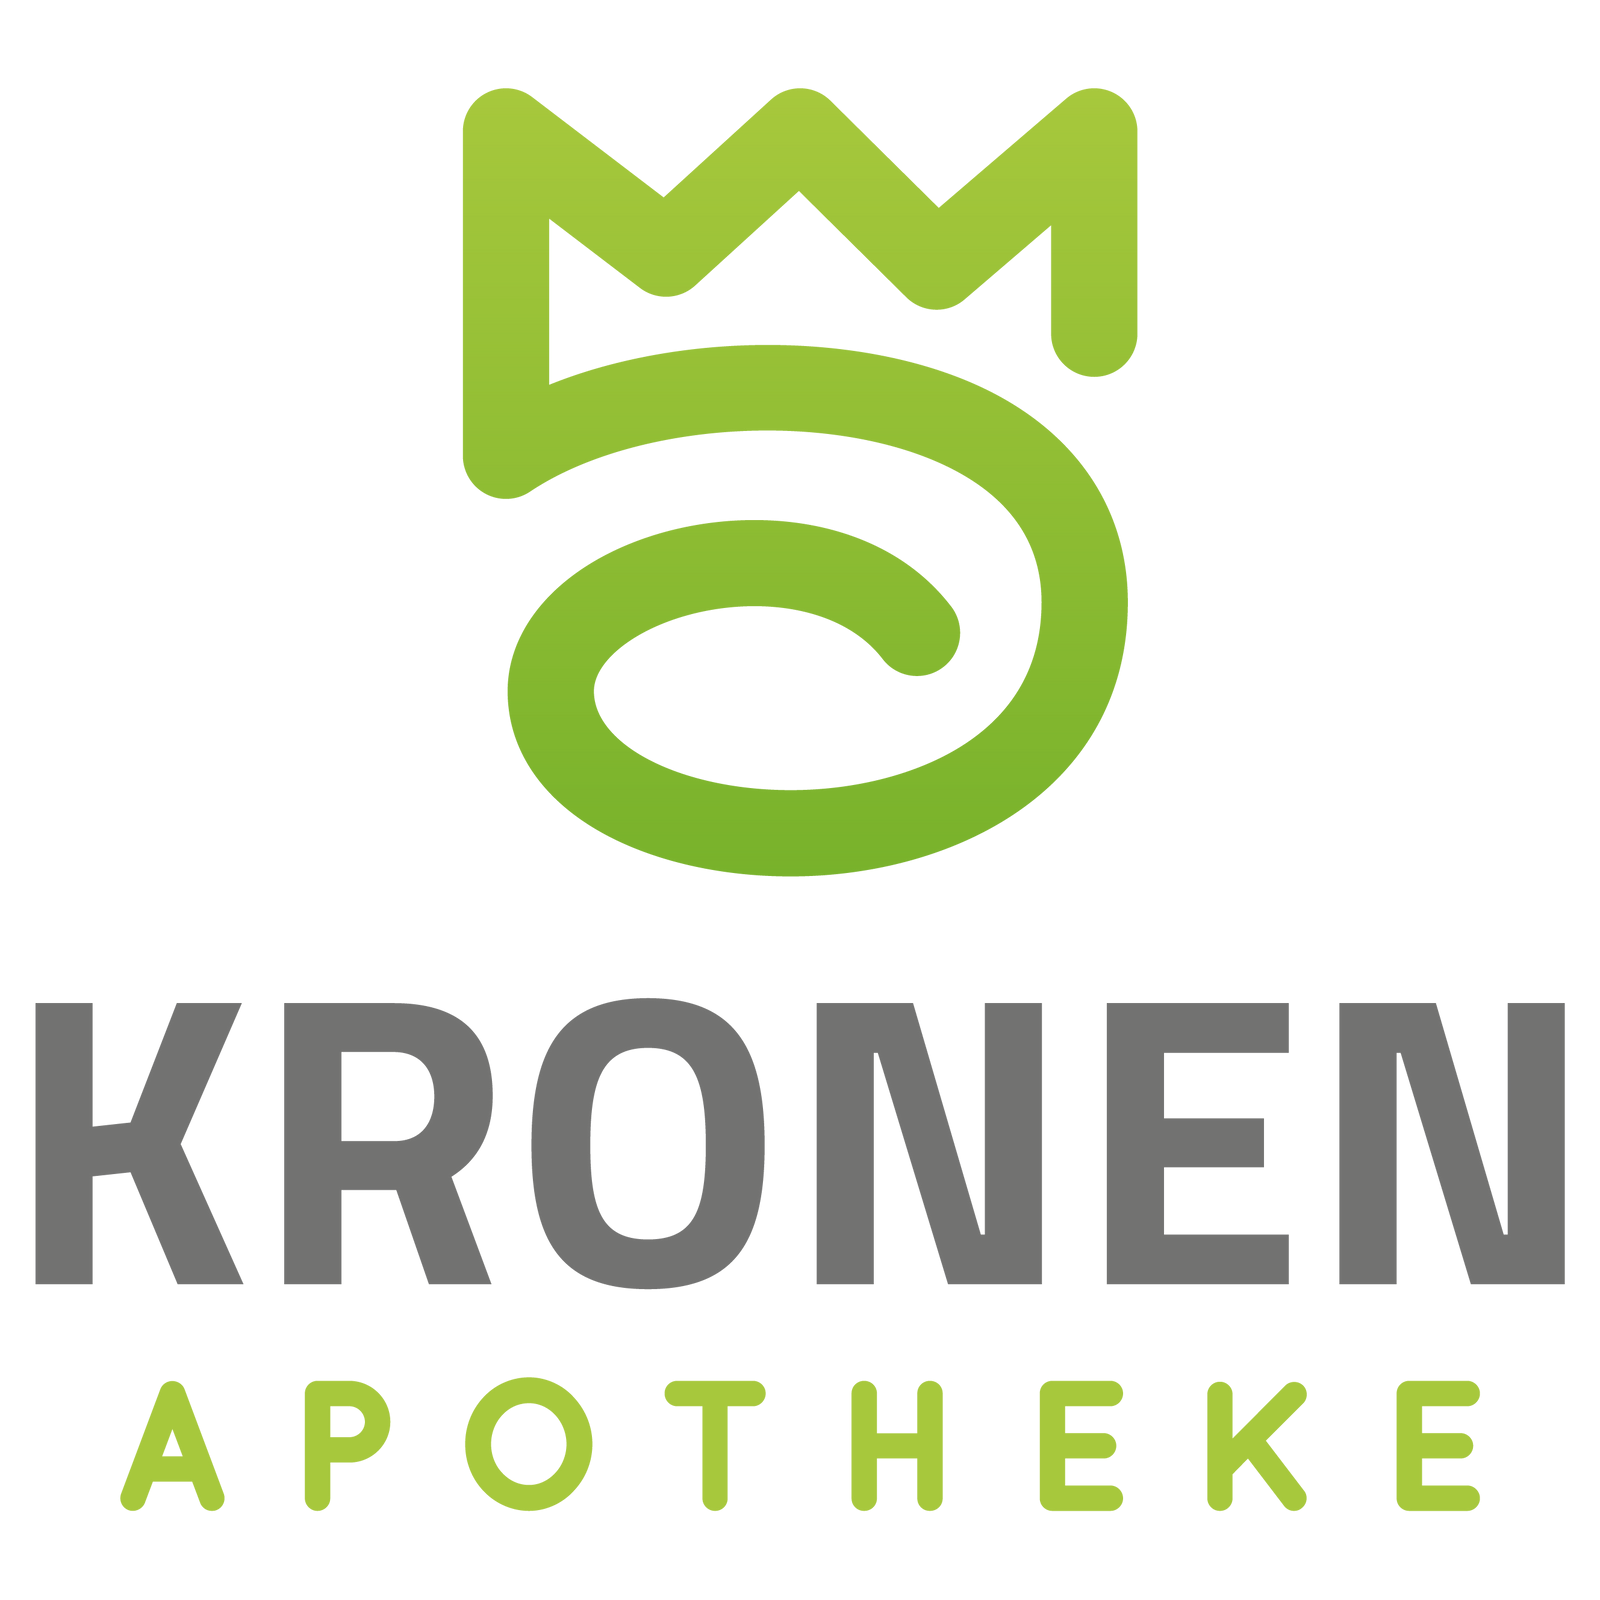 Kronen-Apotheke in Undenheim - Logo